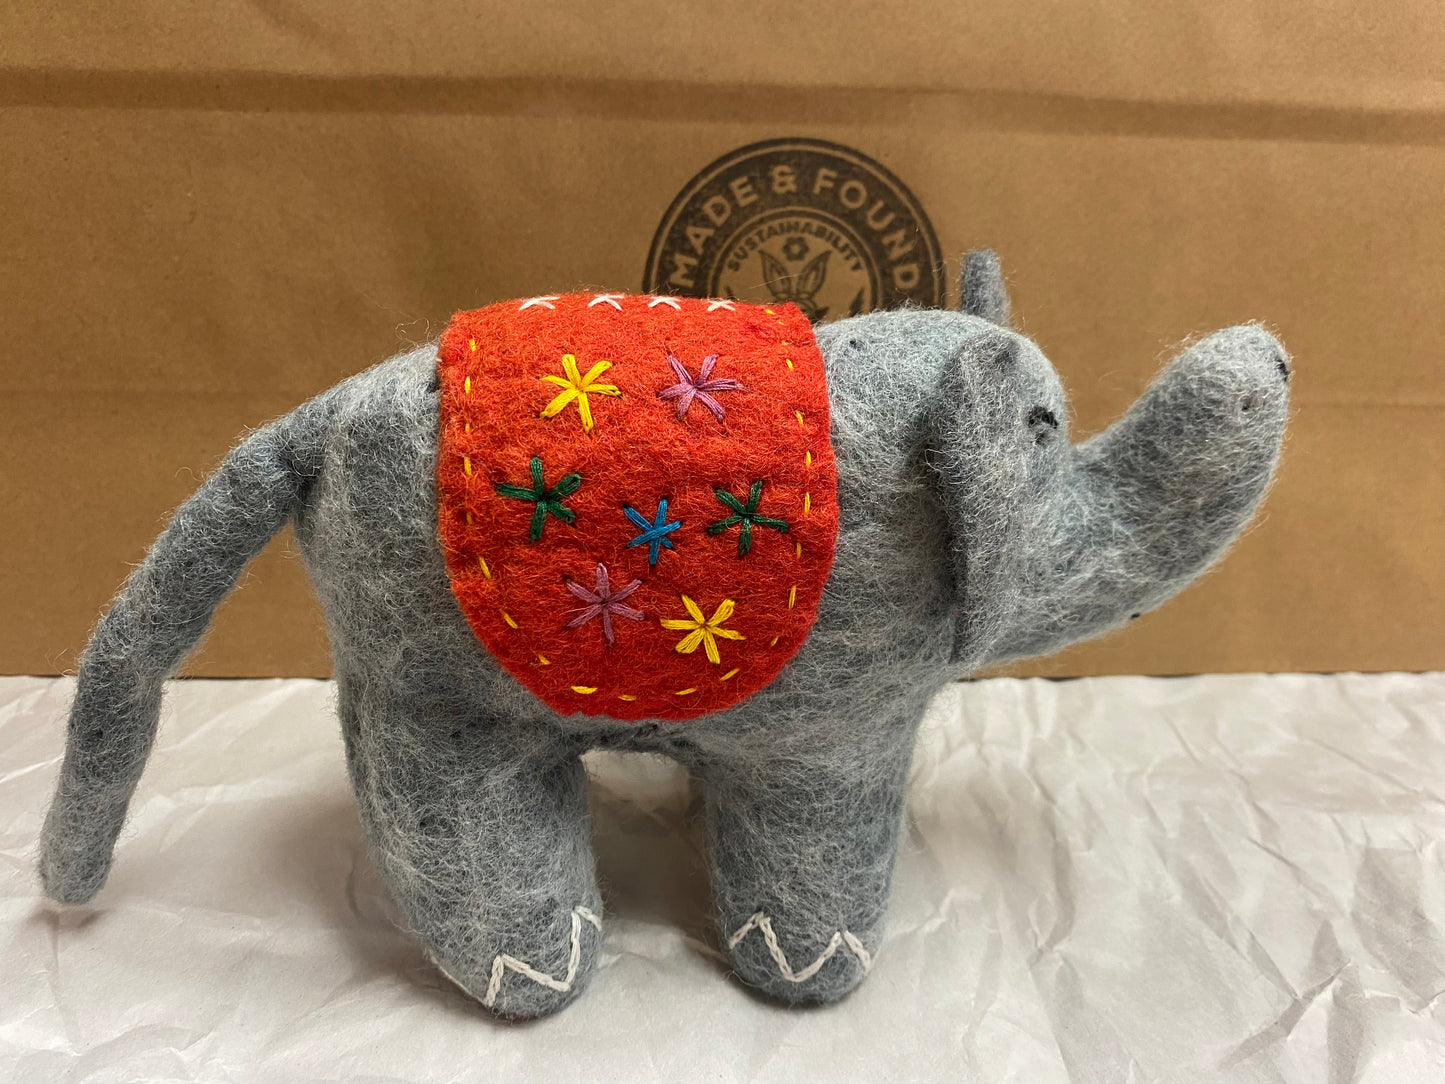 Hand-sewn folk art stuffed animal elephant